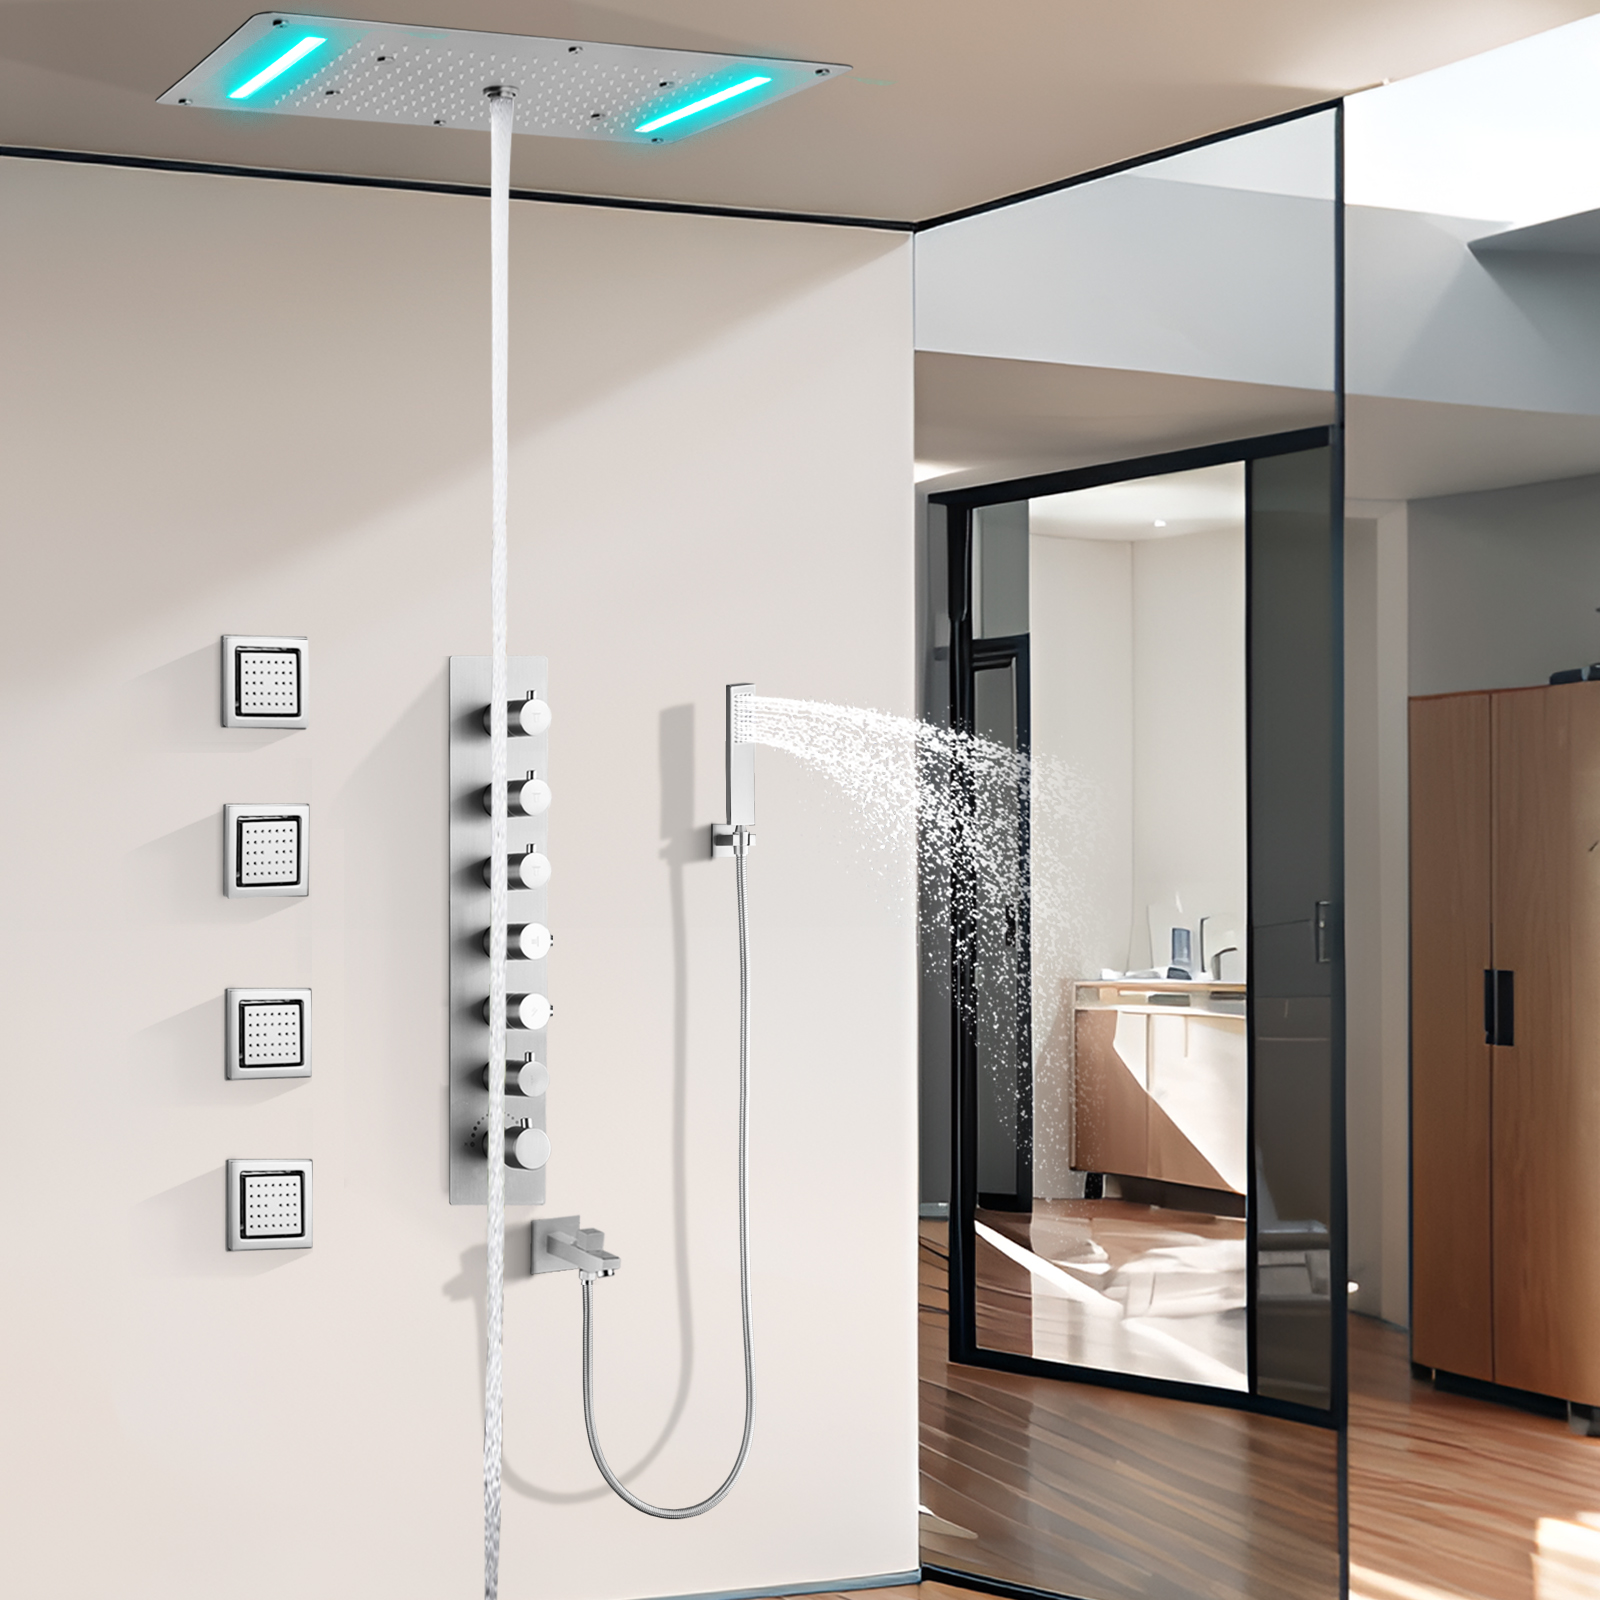 Ritting Nickel Constant Temperature Shower Head Rinse The Bathroom Modern Dark Rainfall LED Shower Panel Atomizer Spa